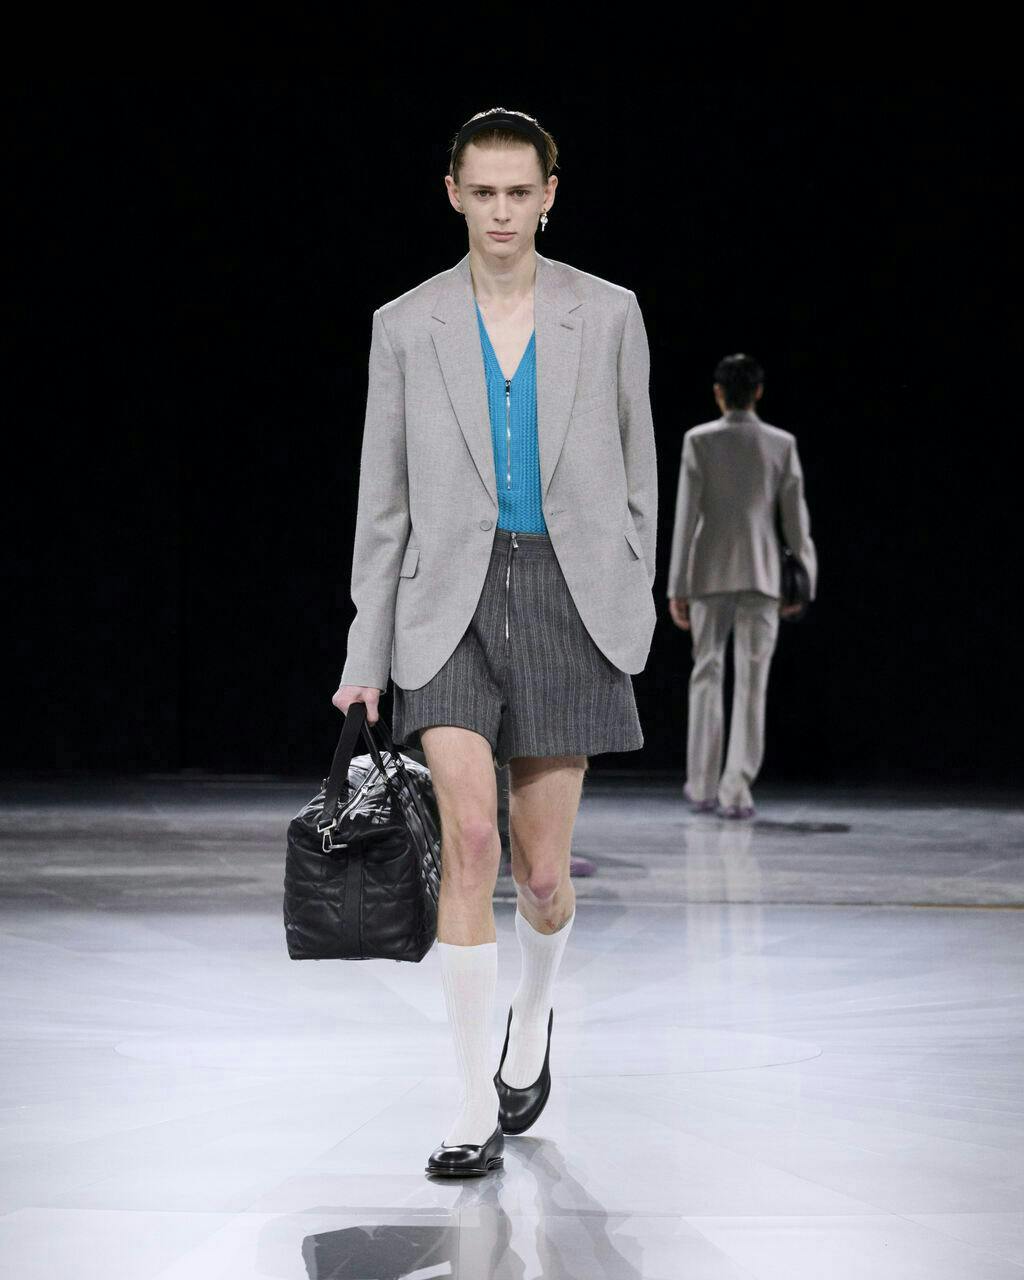 handbag coat jacket fashion blazer adult male man person shorts